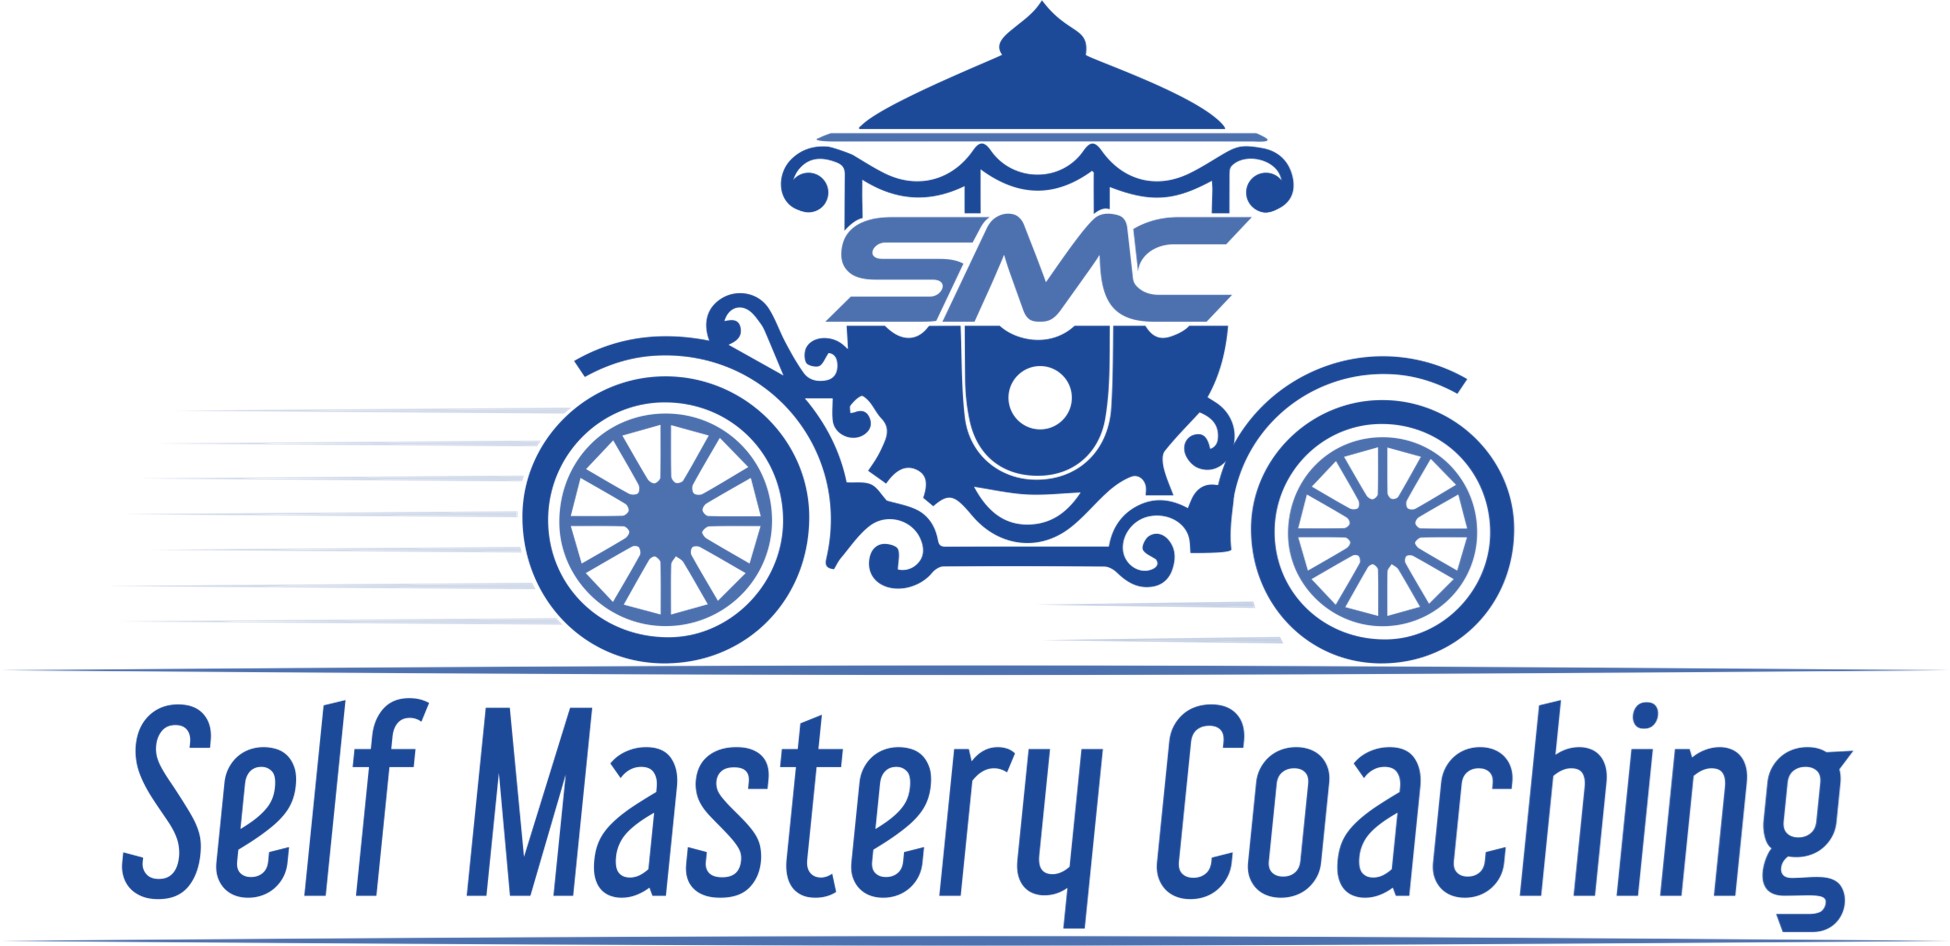 Self Mastery Coaching